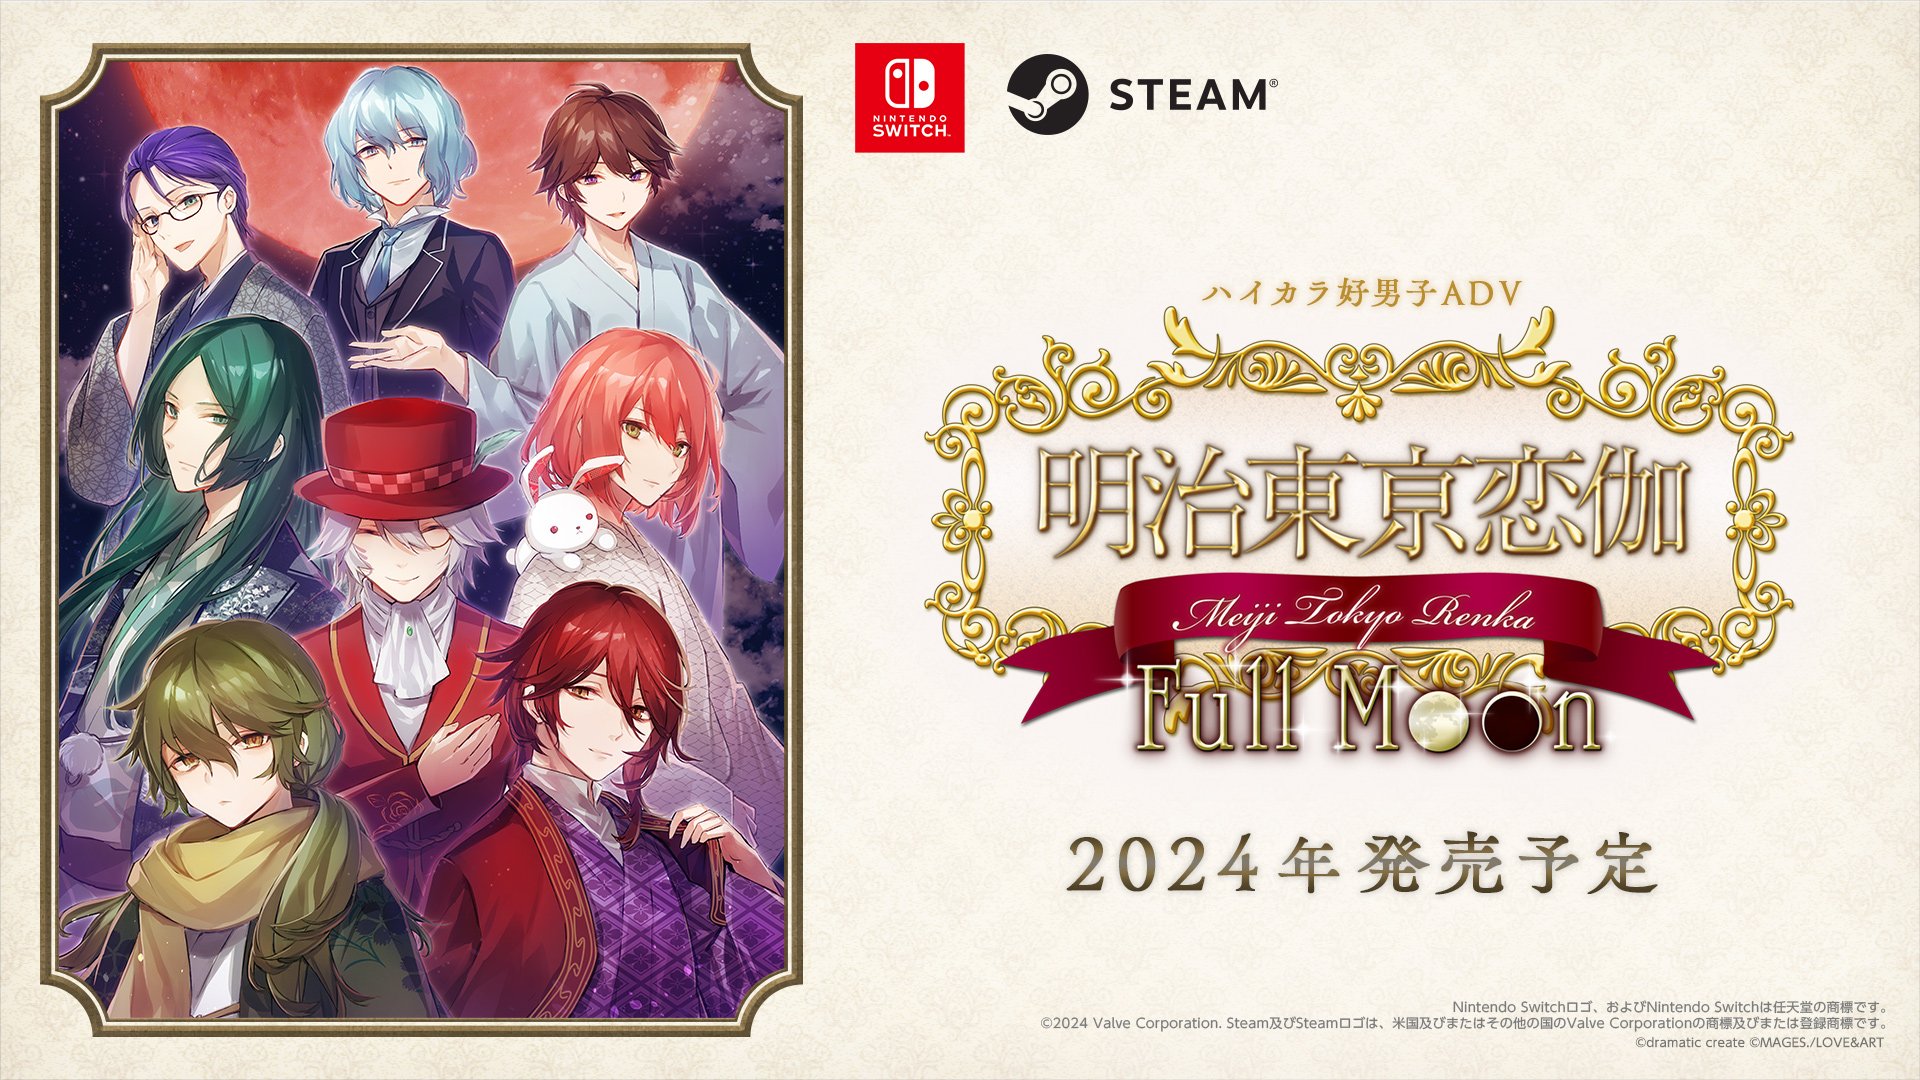 Otome visual novel Meiji Tokyo Renka: Full Moon coming to Switch, PC in 2024 worldwide